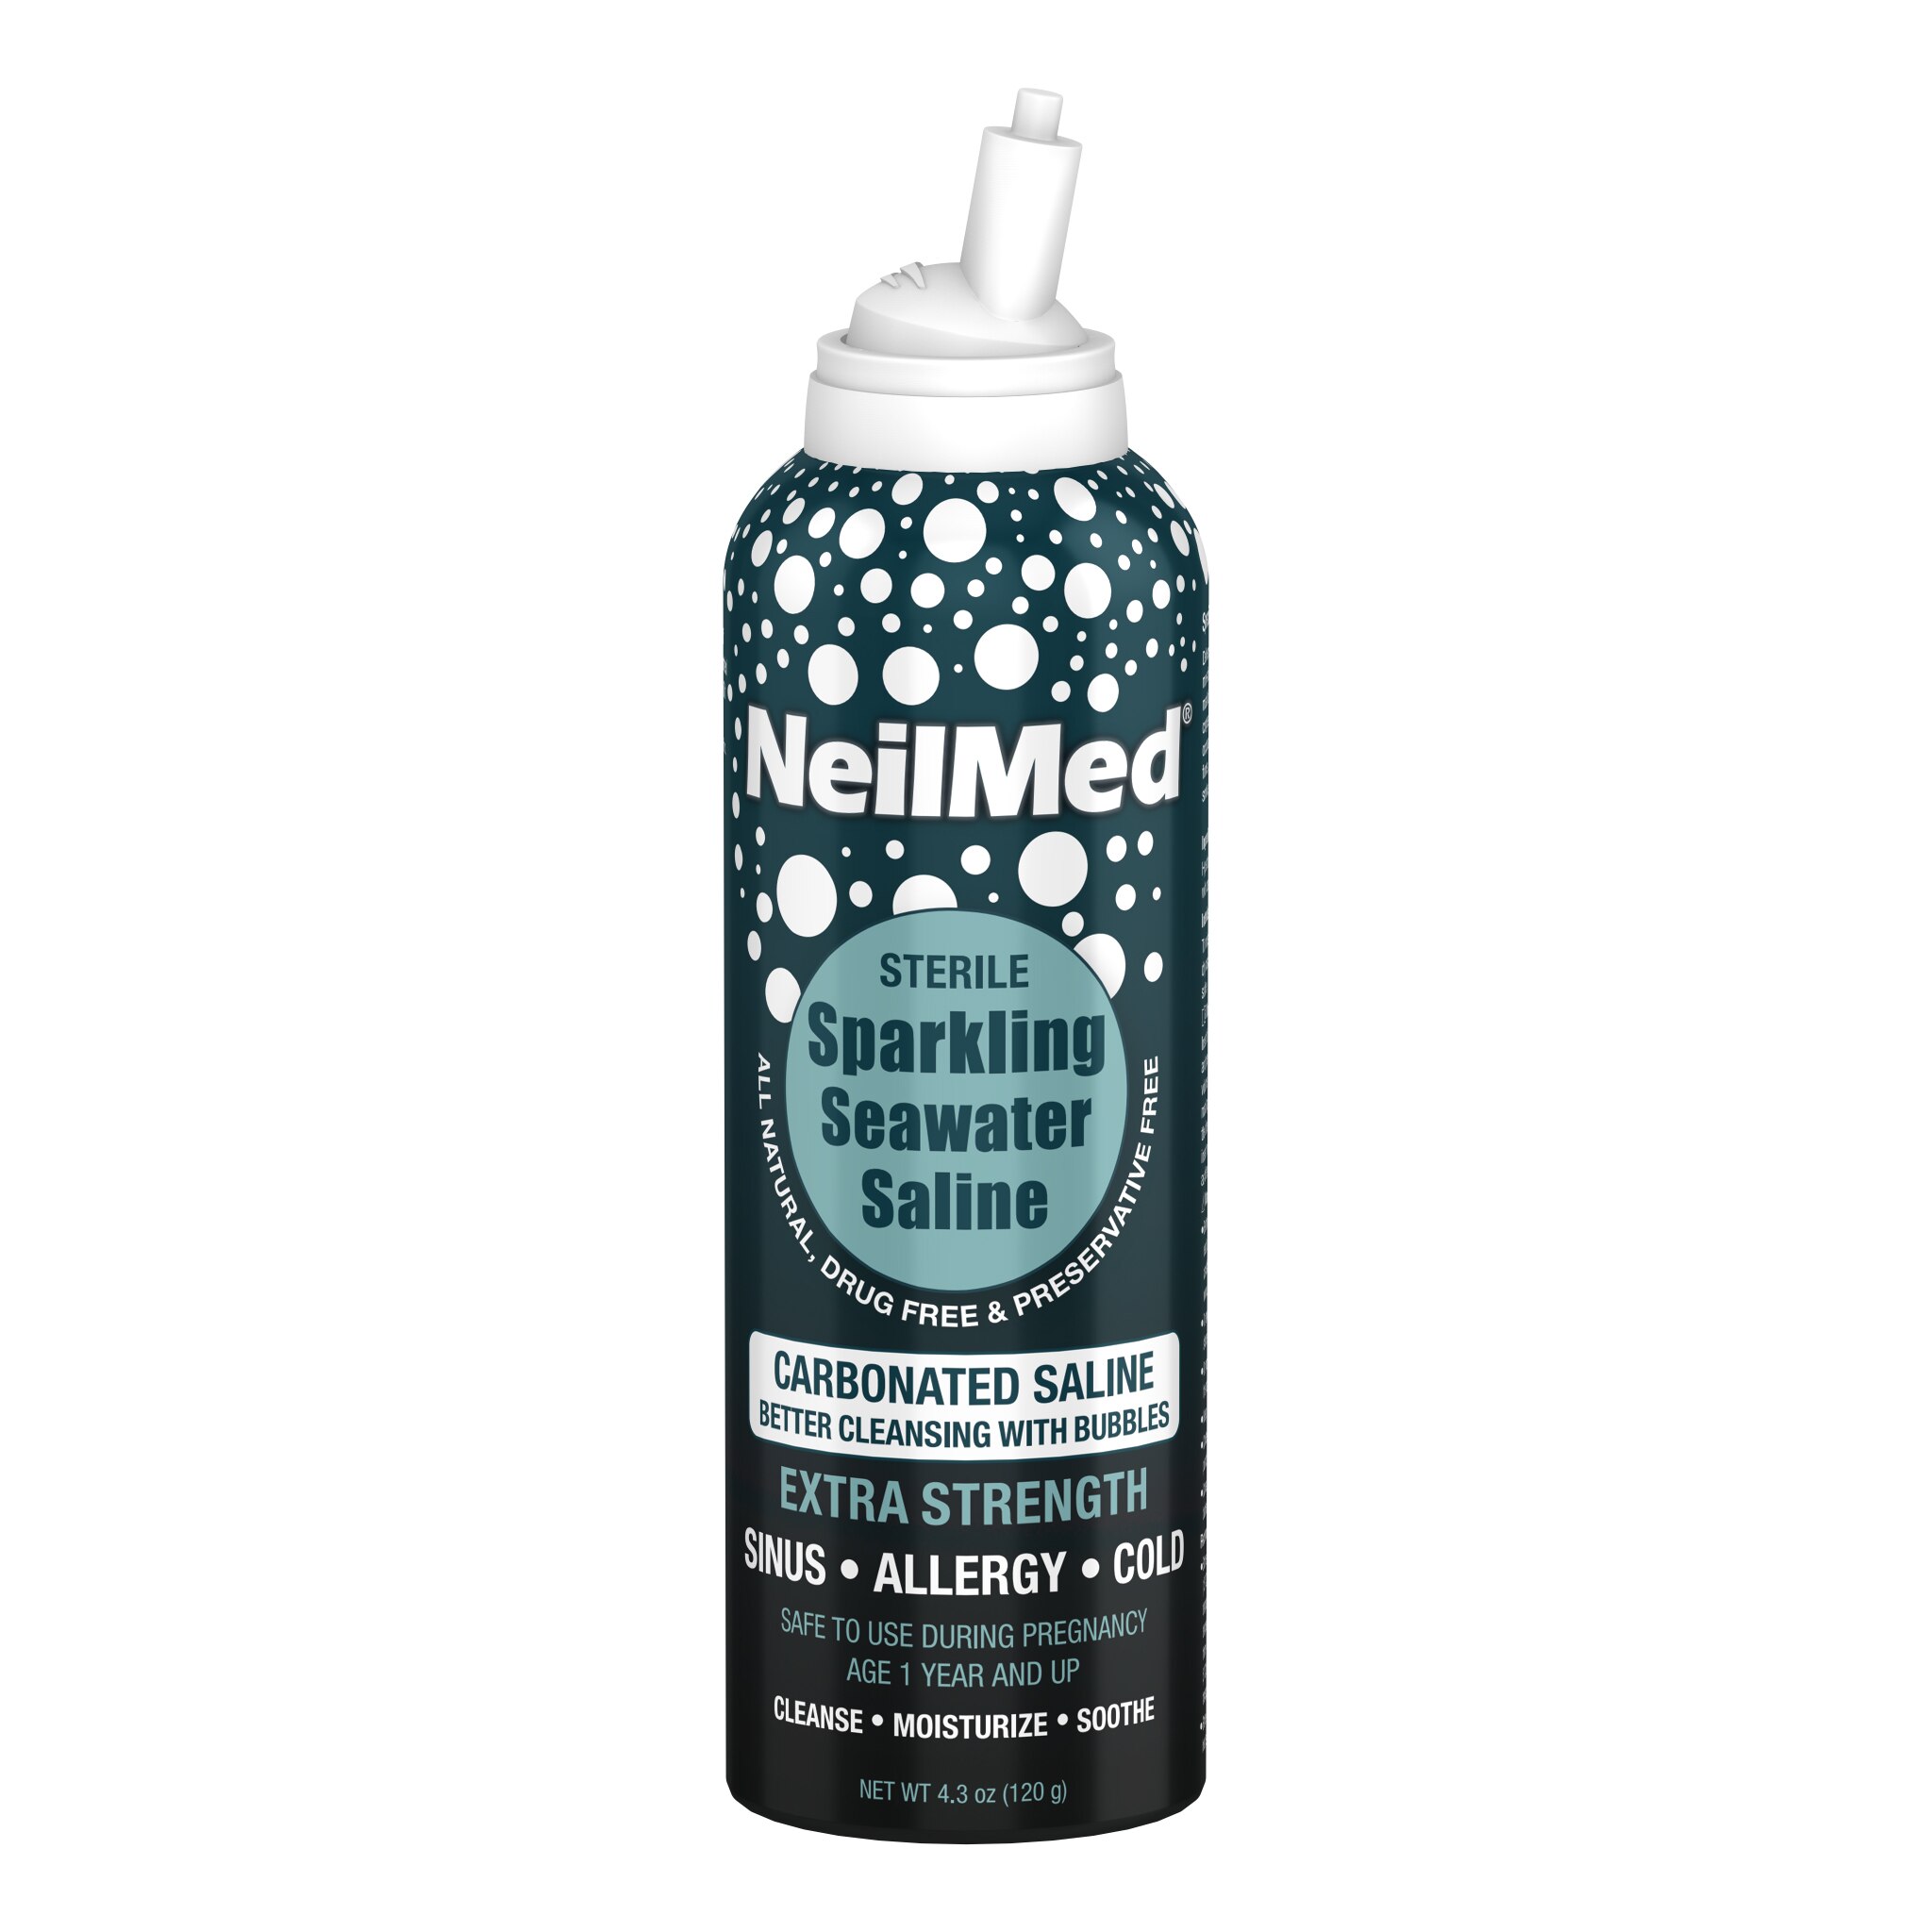 NeilMed Sparkling Seawater Saline, 4.2OZ